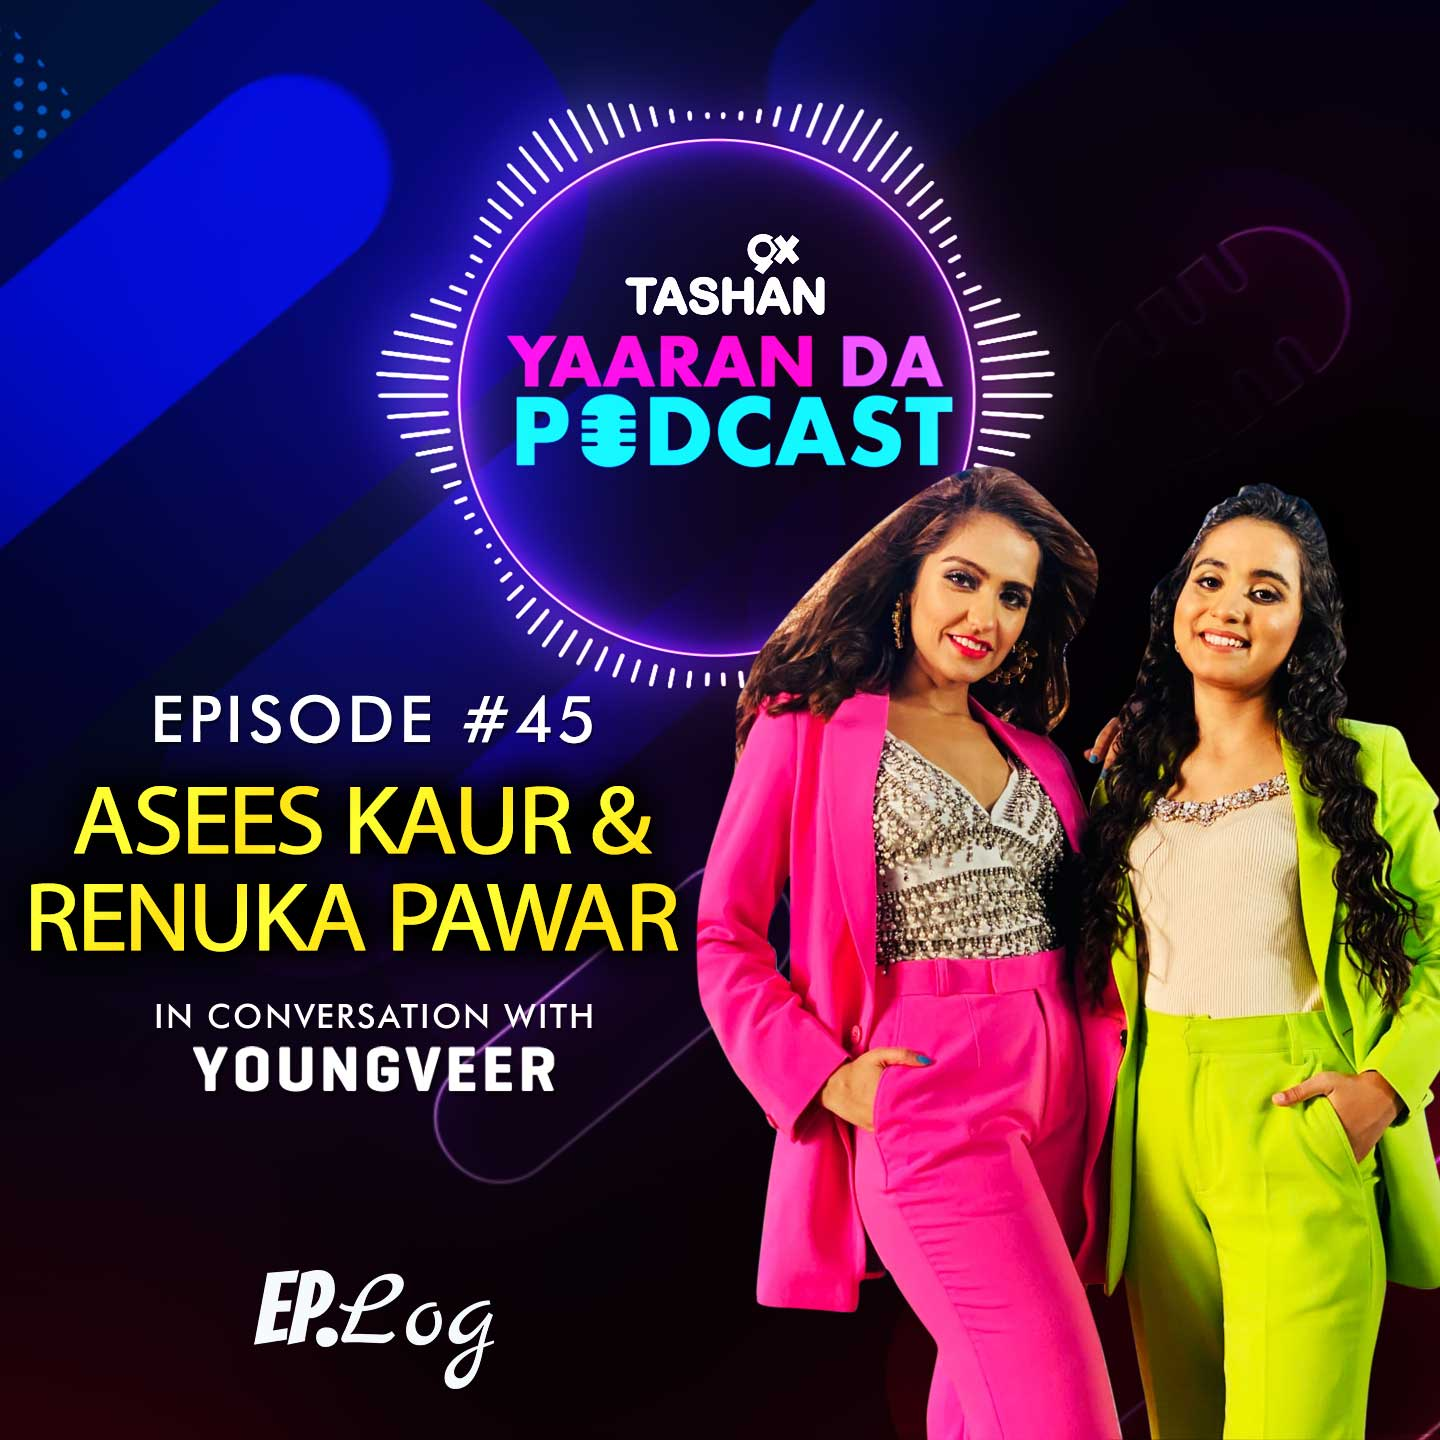 9x Tashan Yaaran Da Podcast ft. Asees Kaur and Renuka Panwar